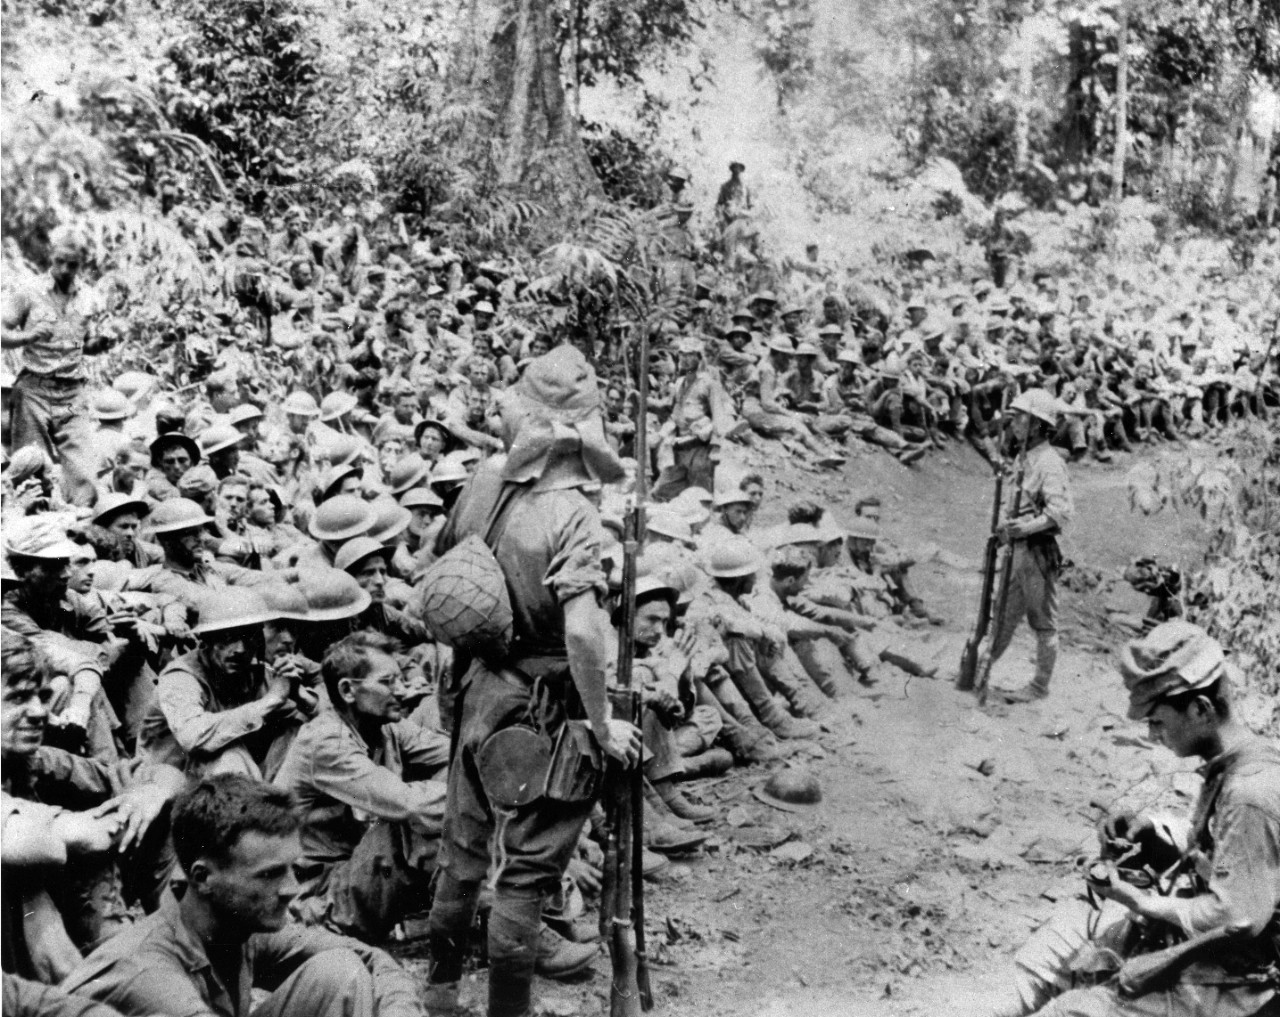 Invasion of the Philippines, 1941-1942